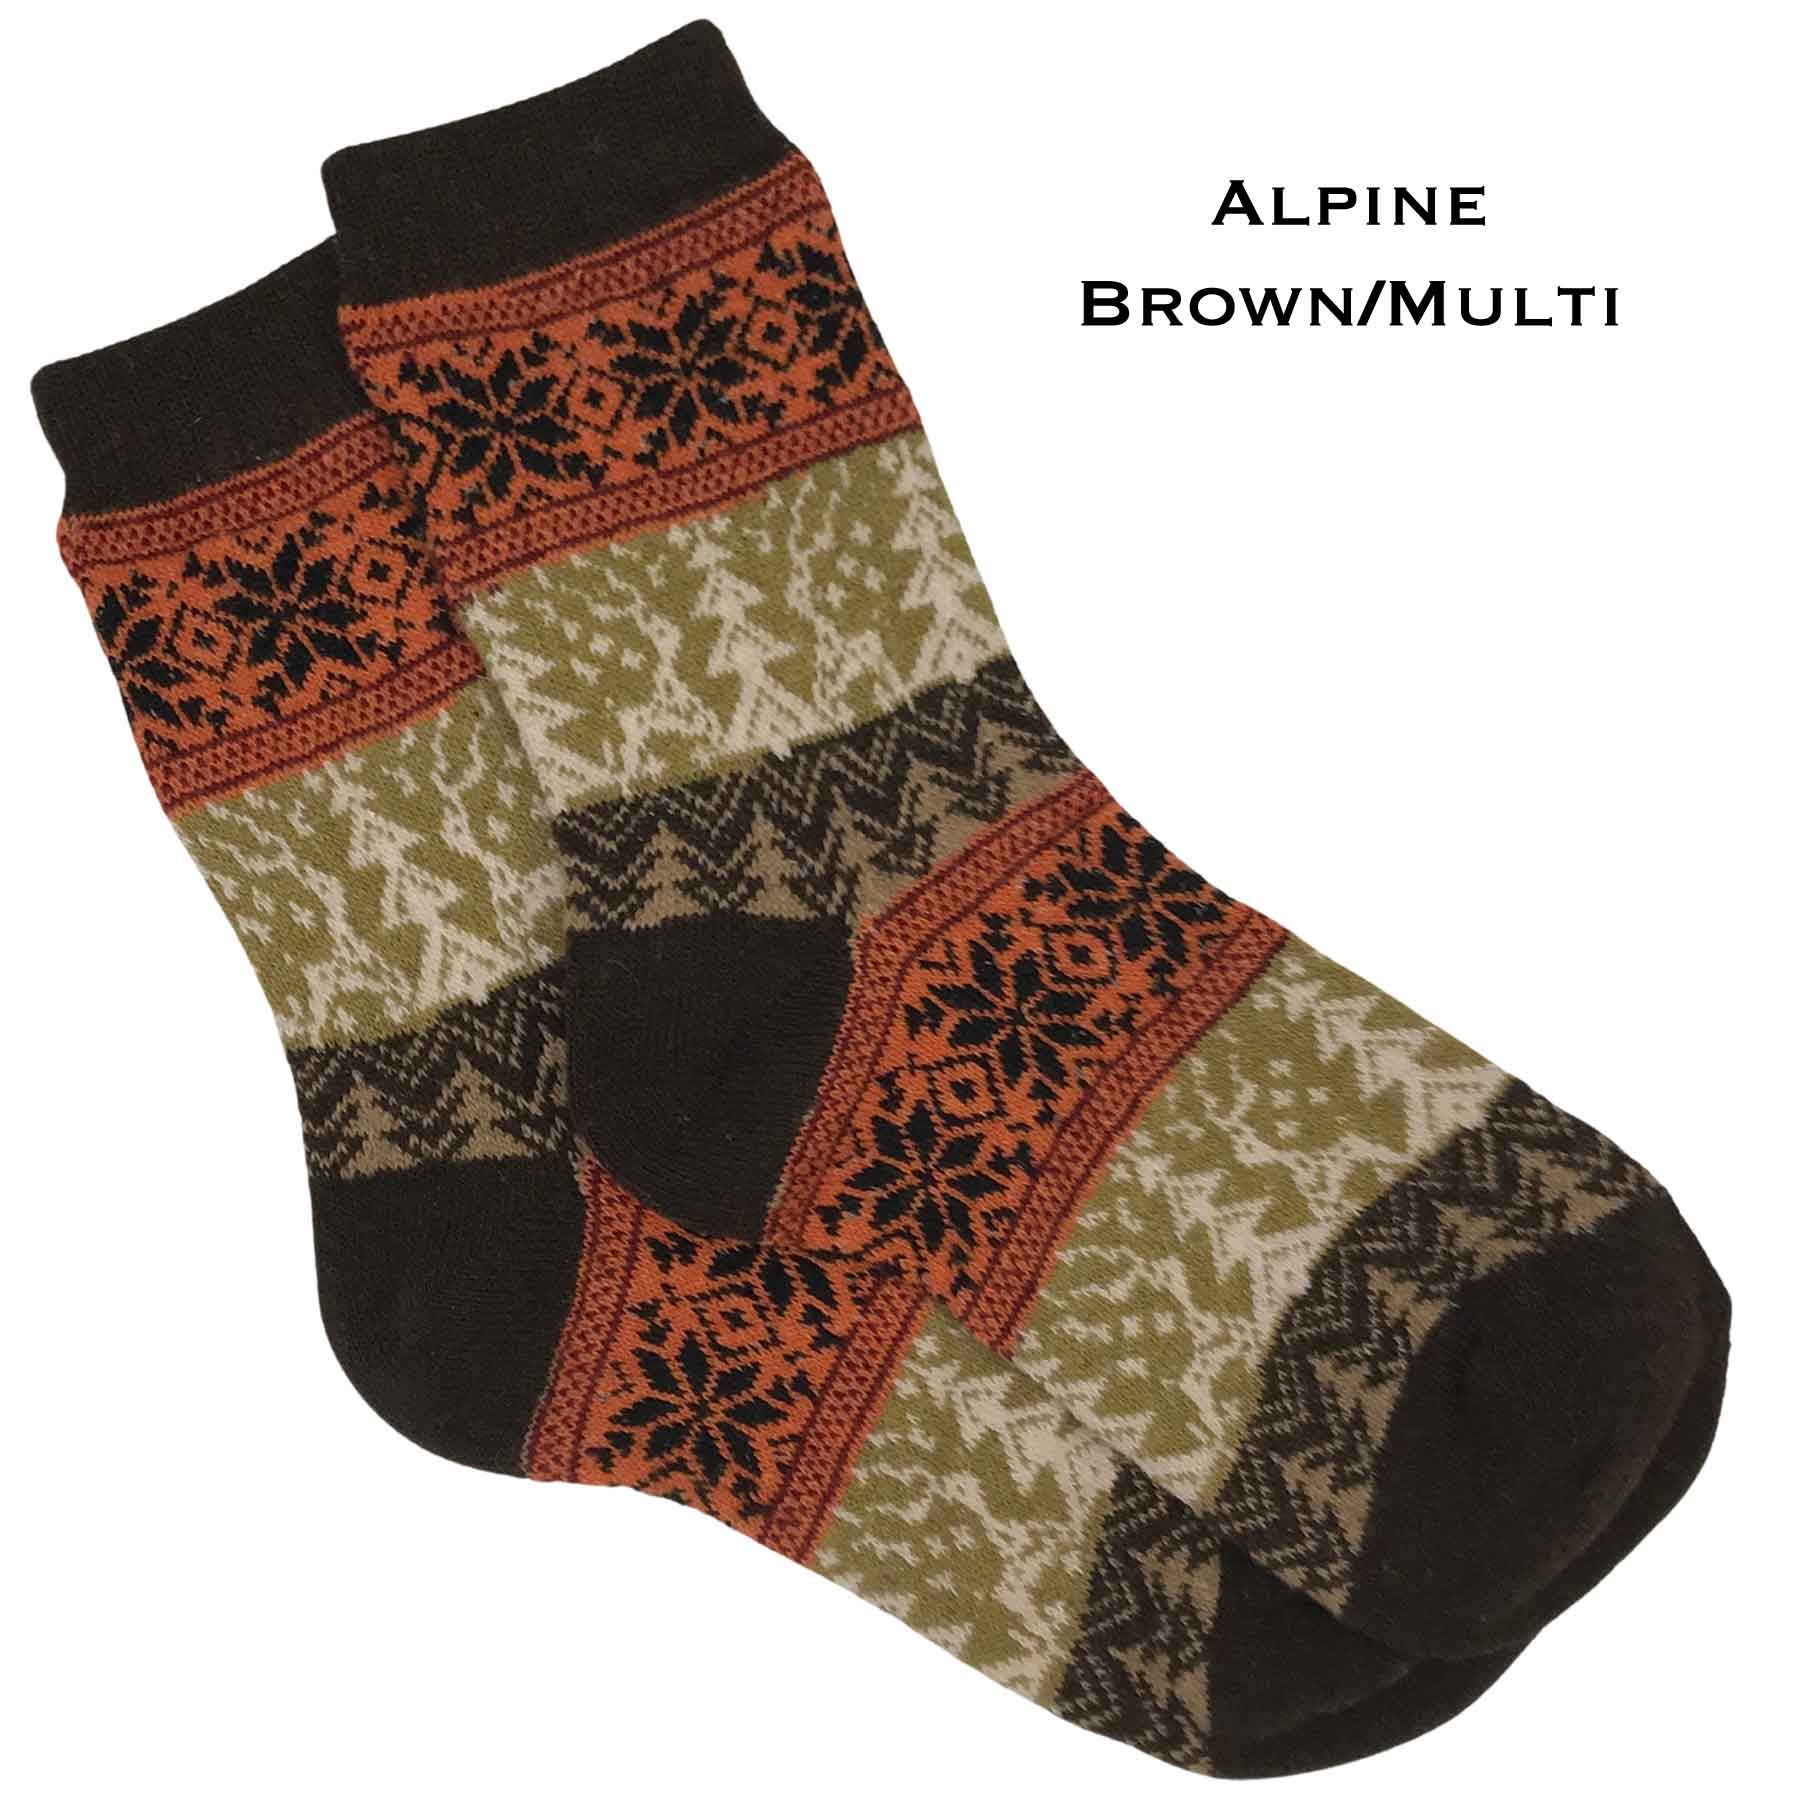 Alpine - Brown/Multi